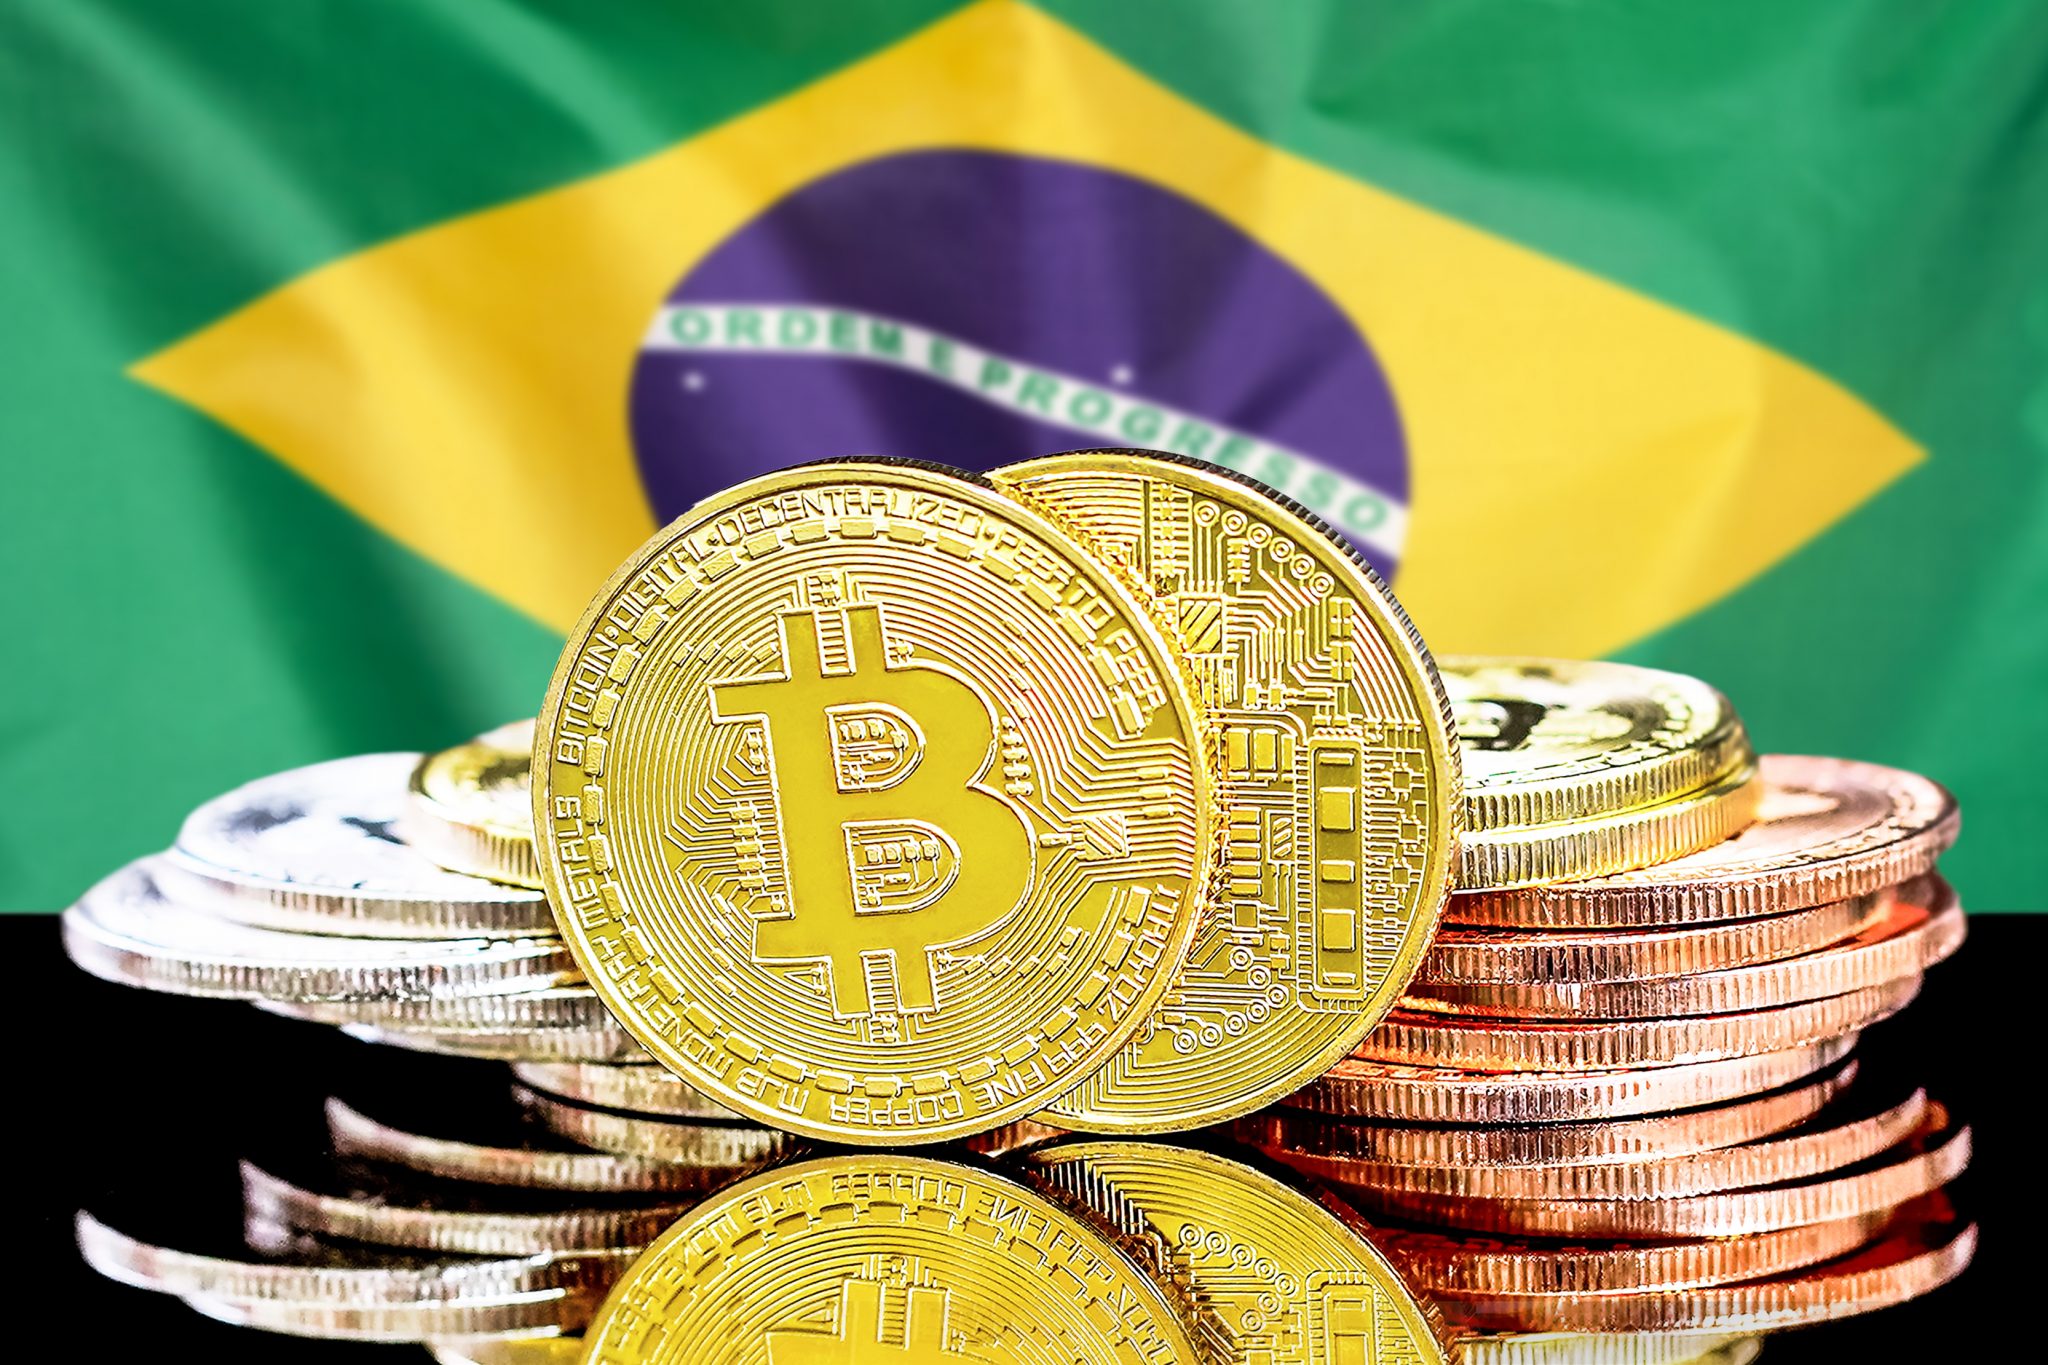 bitcoins on Brazil flag background